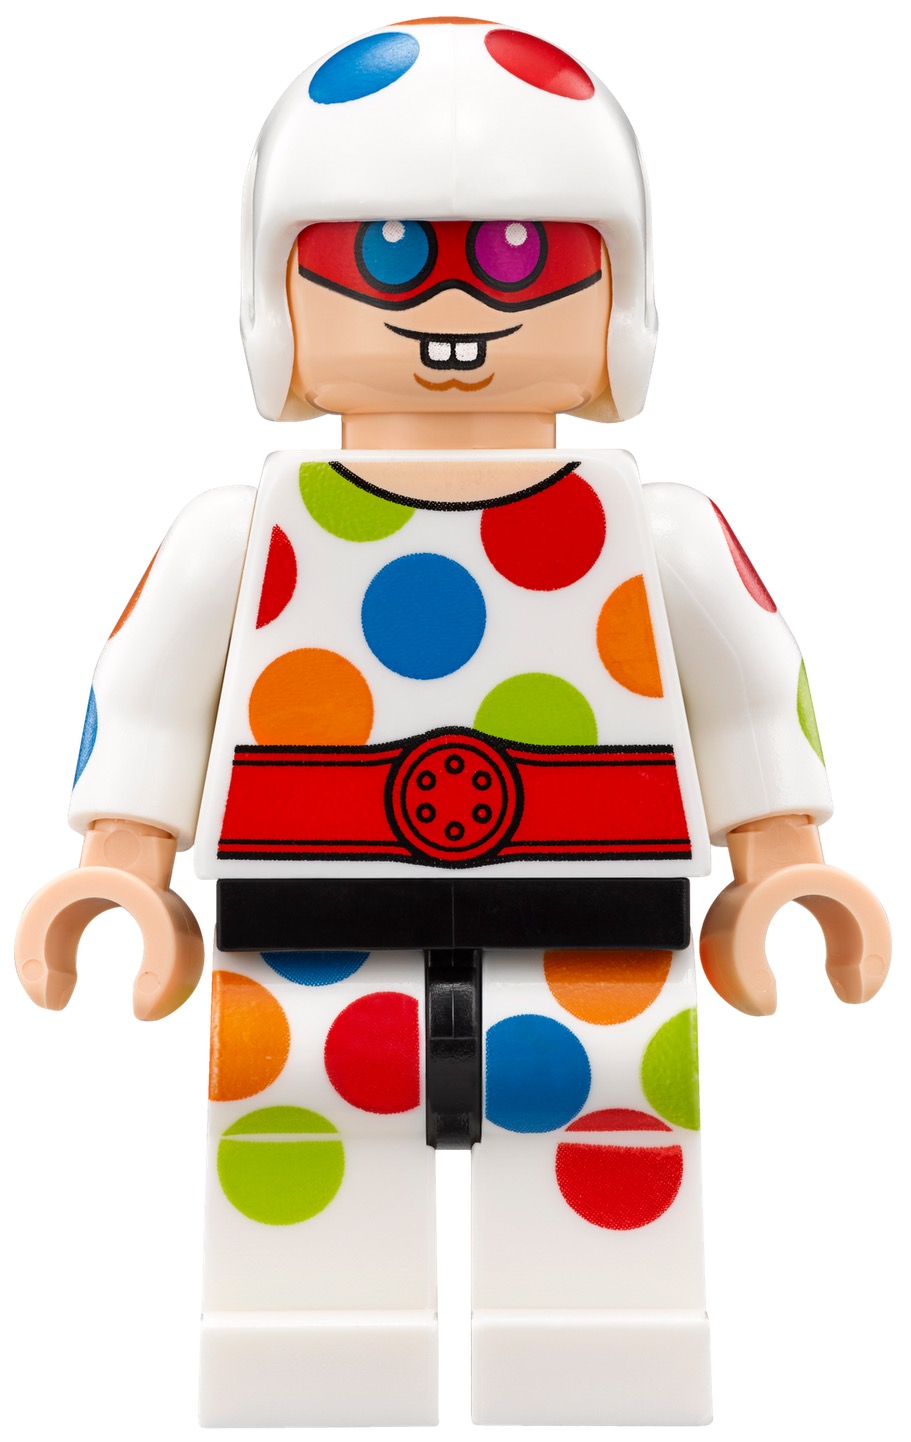 Polka-Dot Man - Brickipedia, the LEGO Wiki